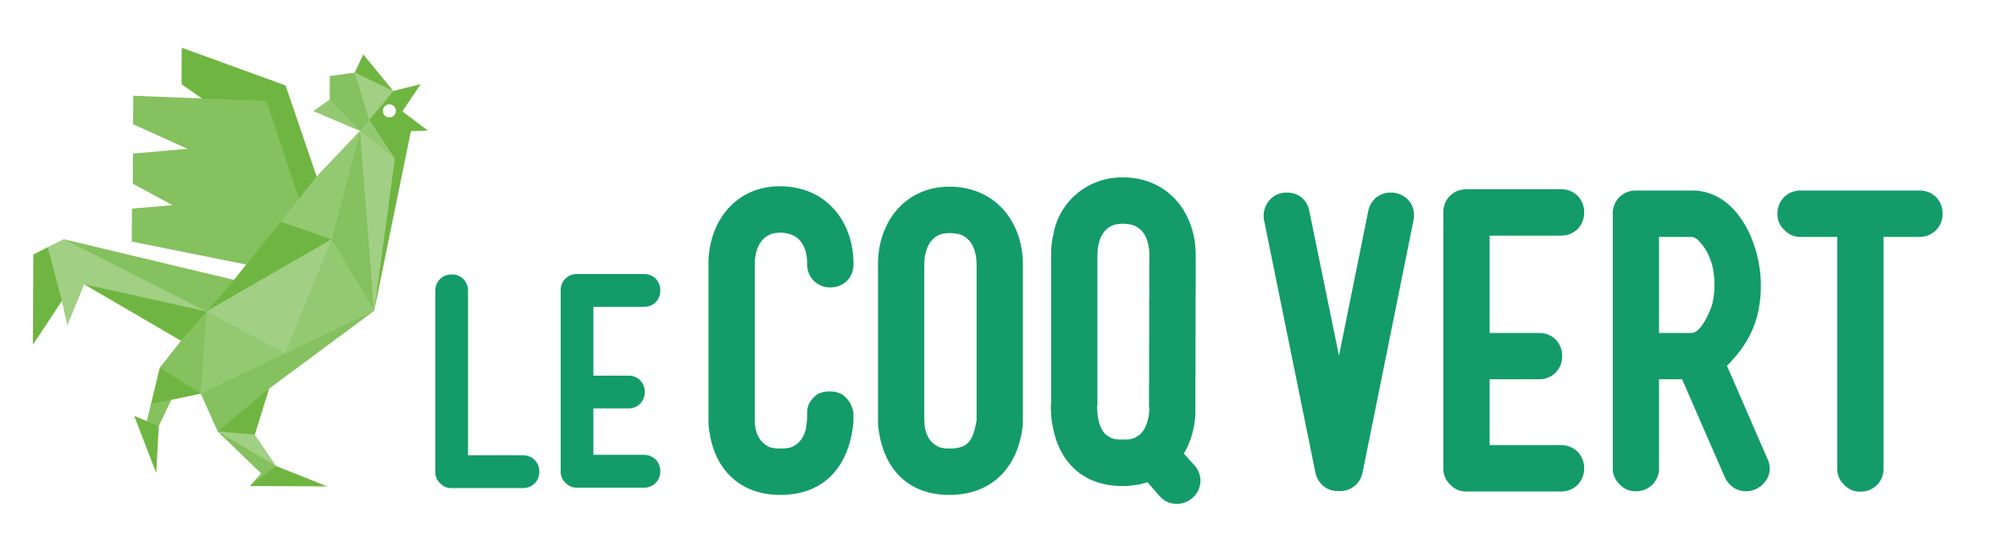 Le logo horizontal du coq vert